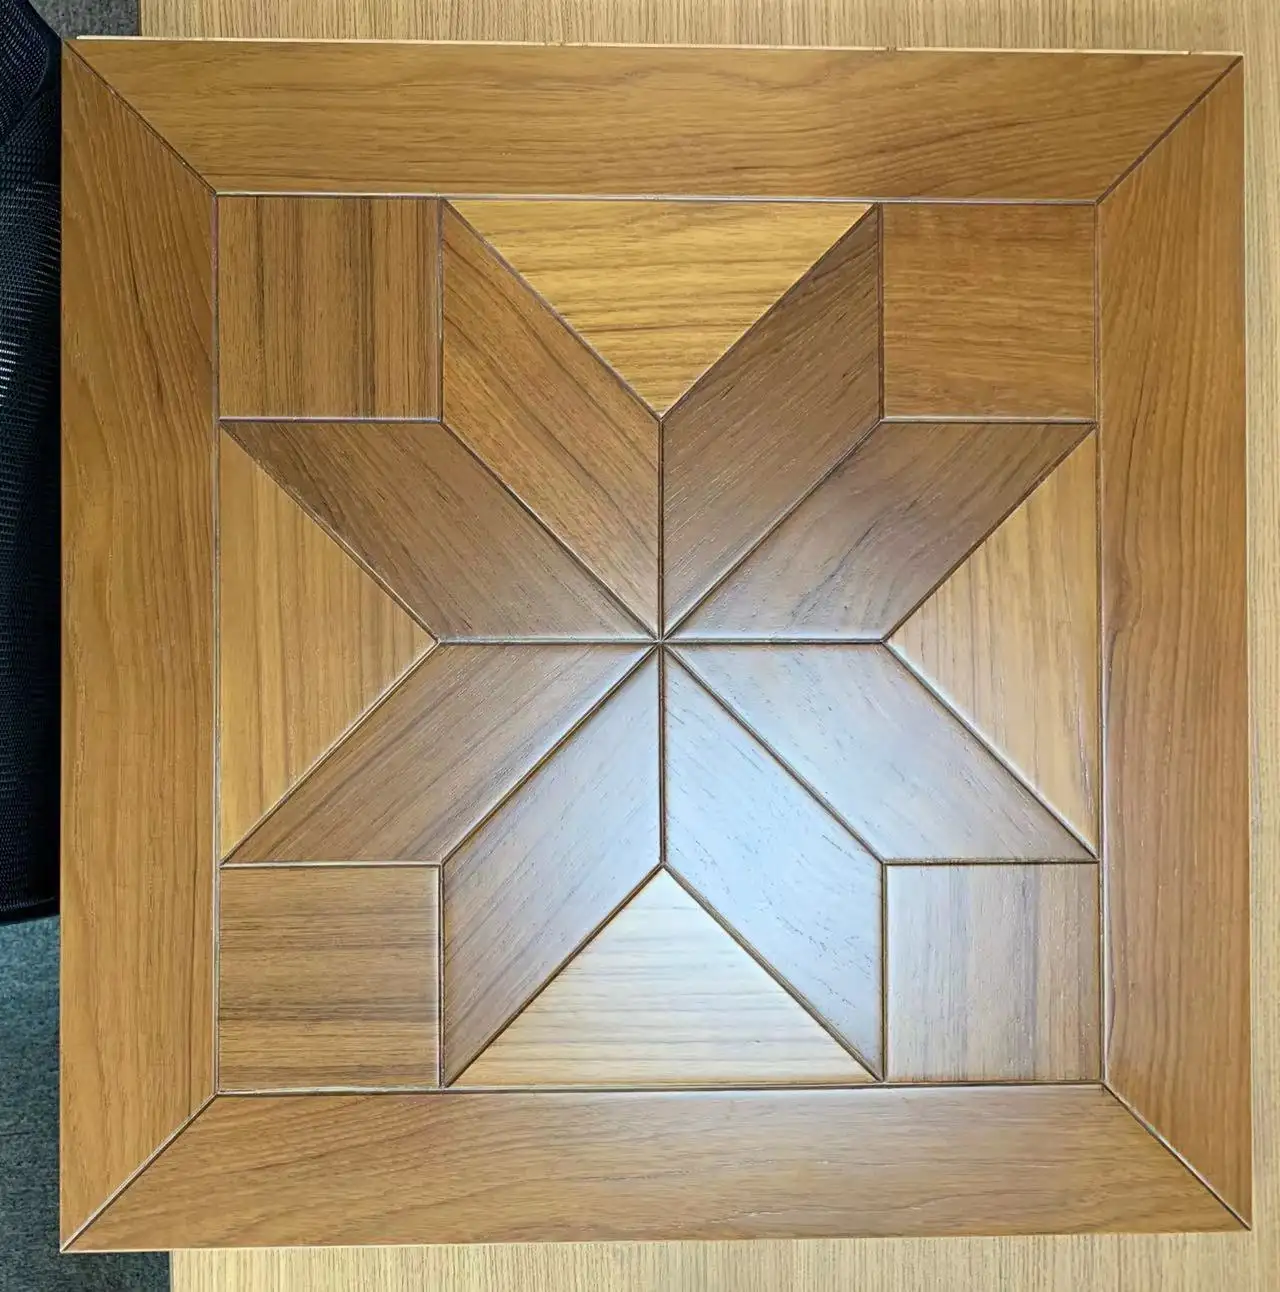 Flower Teak 12x12 Wooden Floor Tile Cheap Price Wood Inlay Parquet Flooring